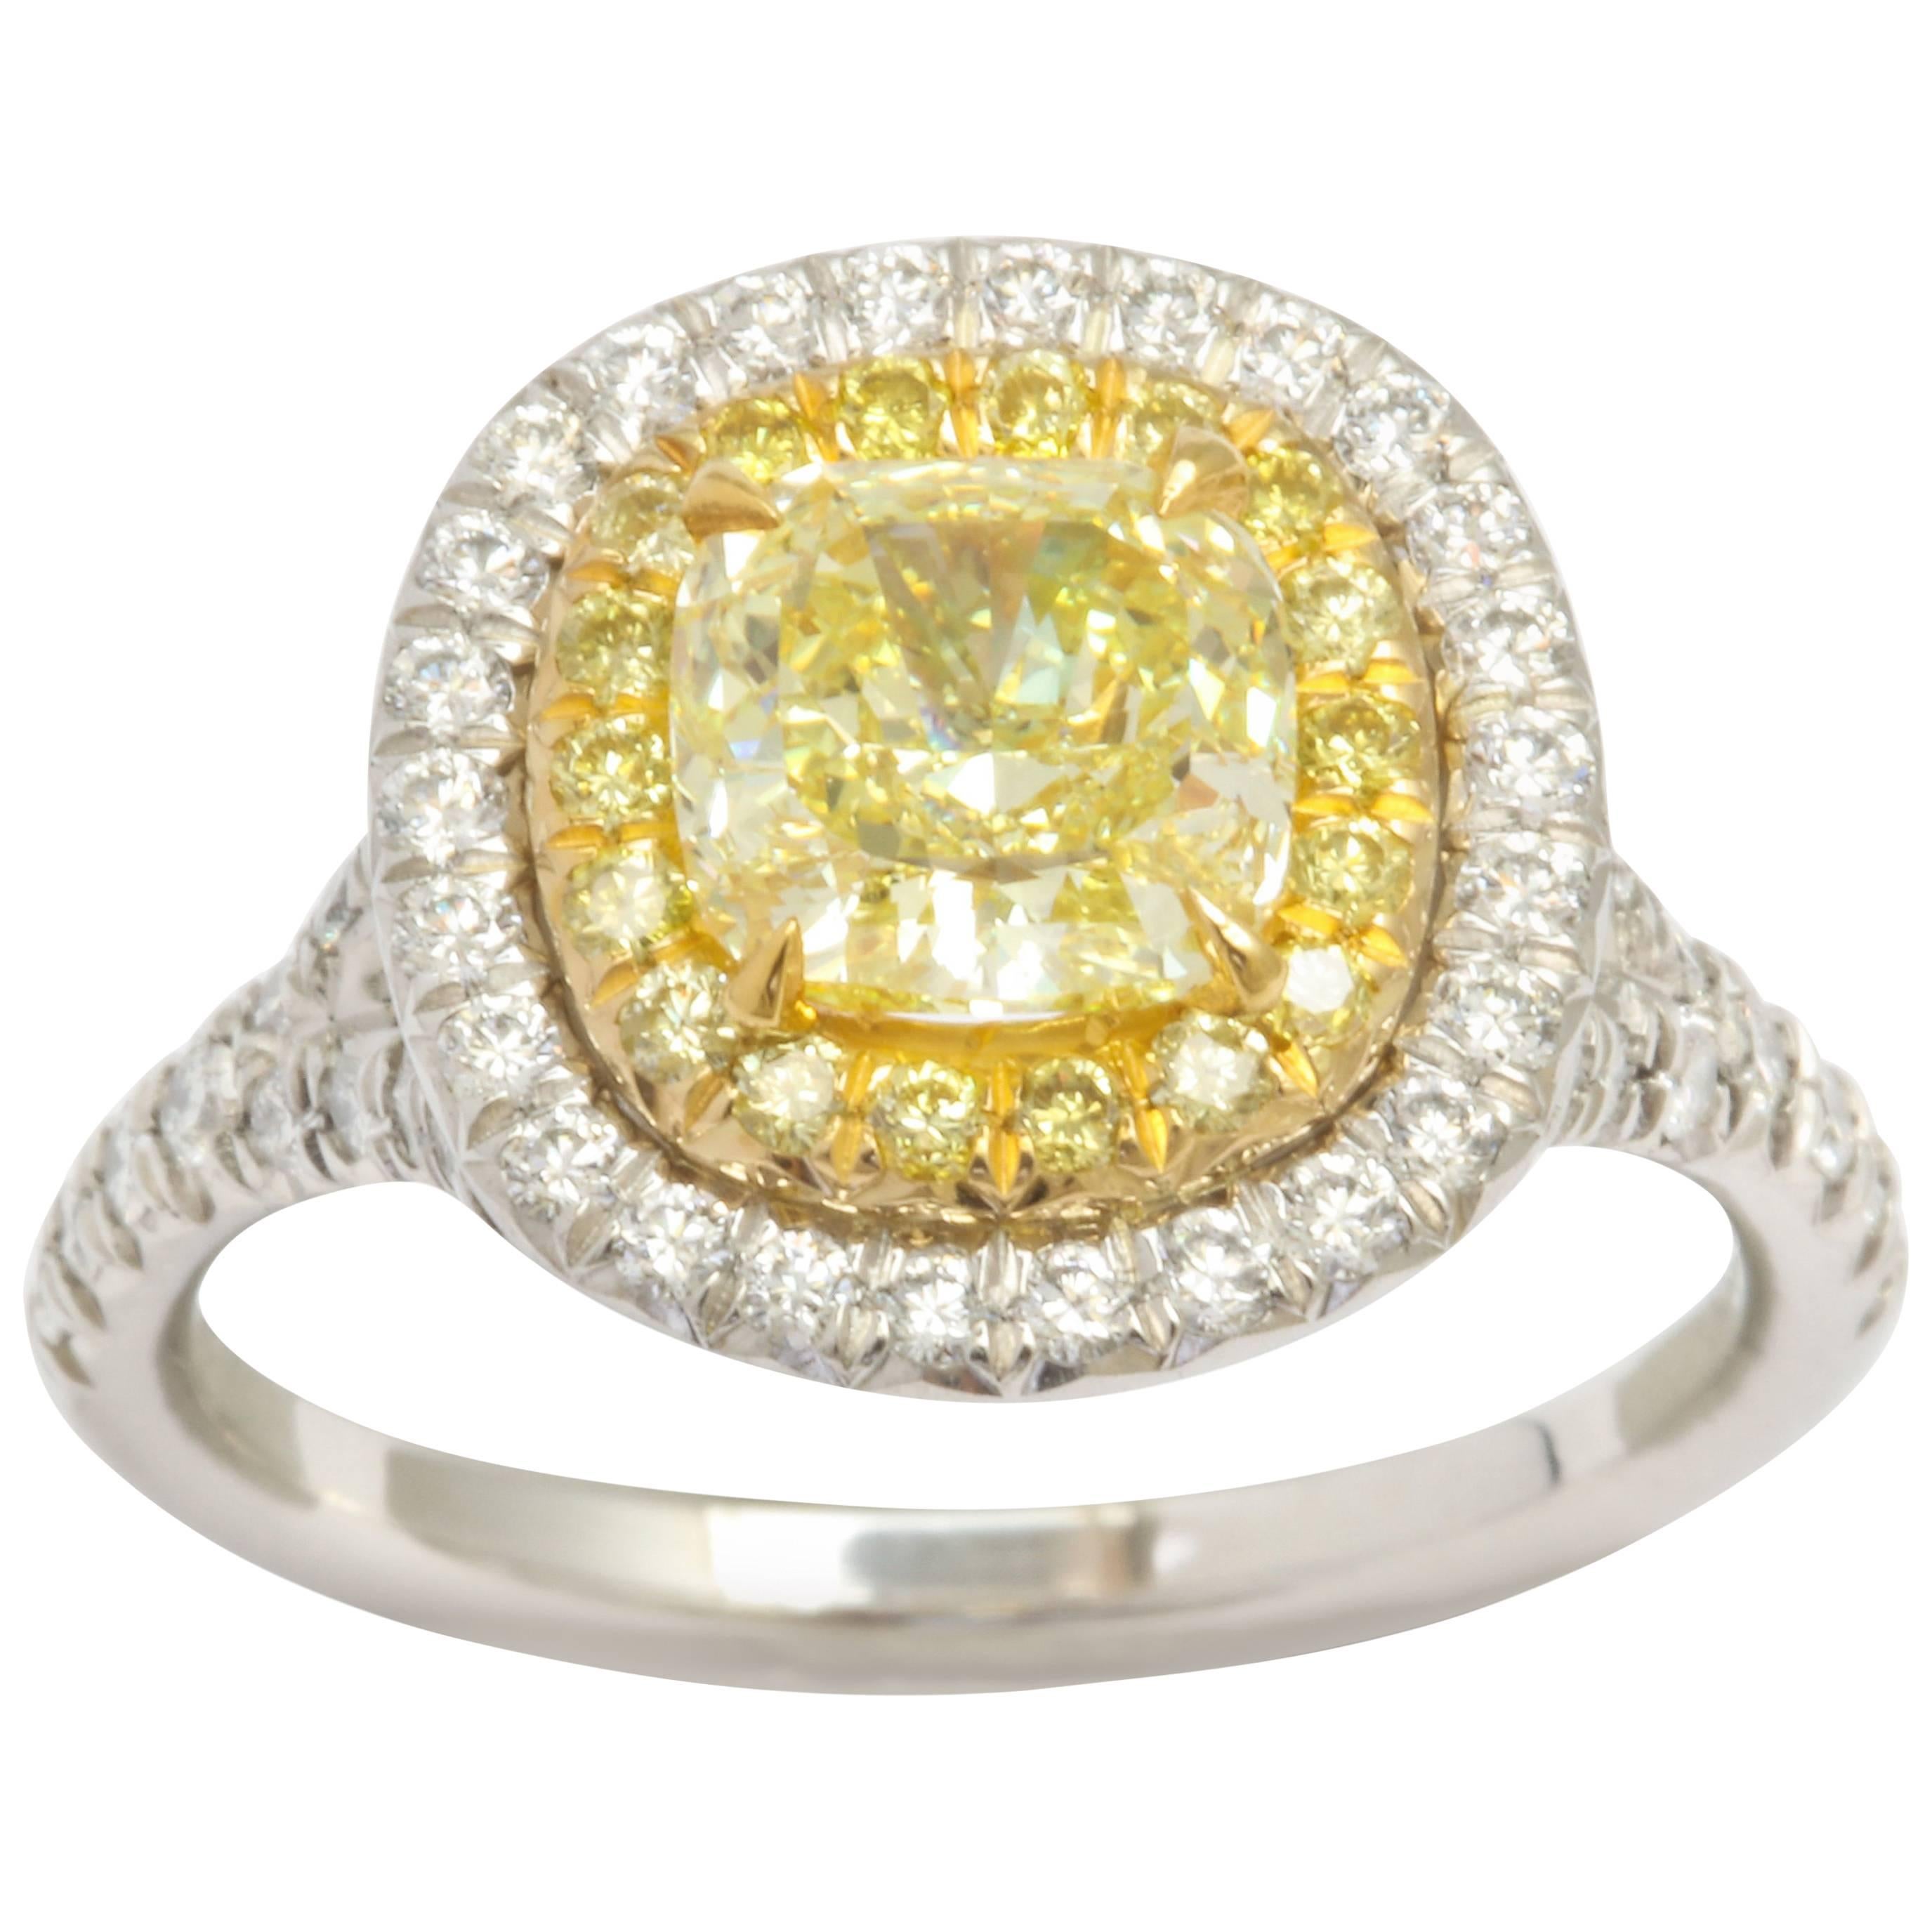 GIA Certified Cushion Cut Intense Yellow Diamond Ring in Platinum 